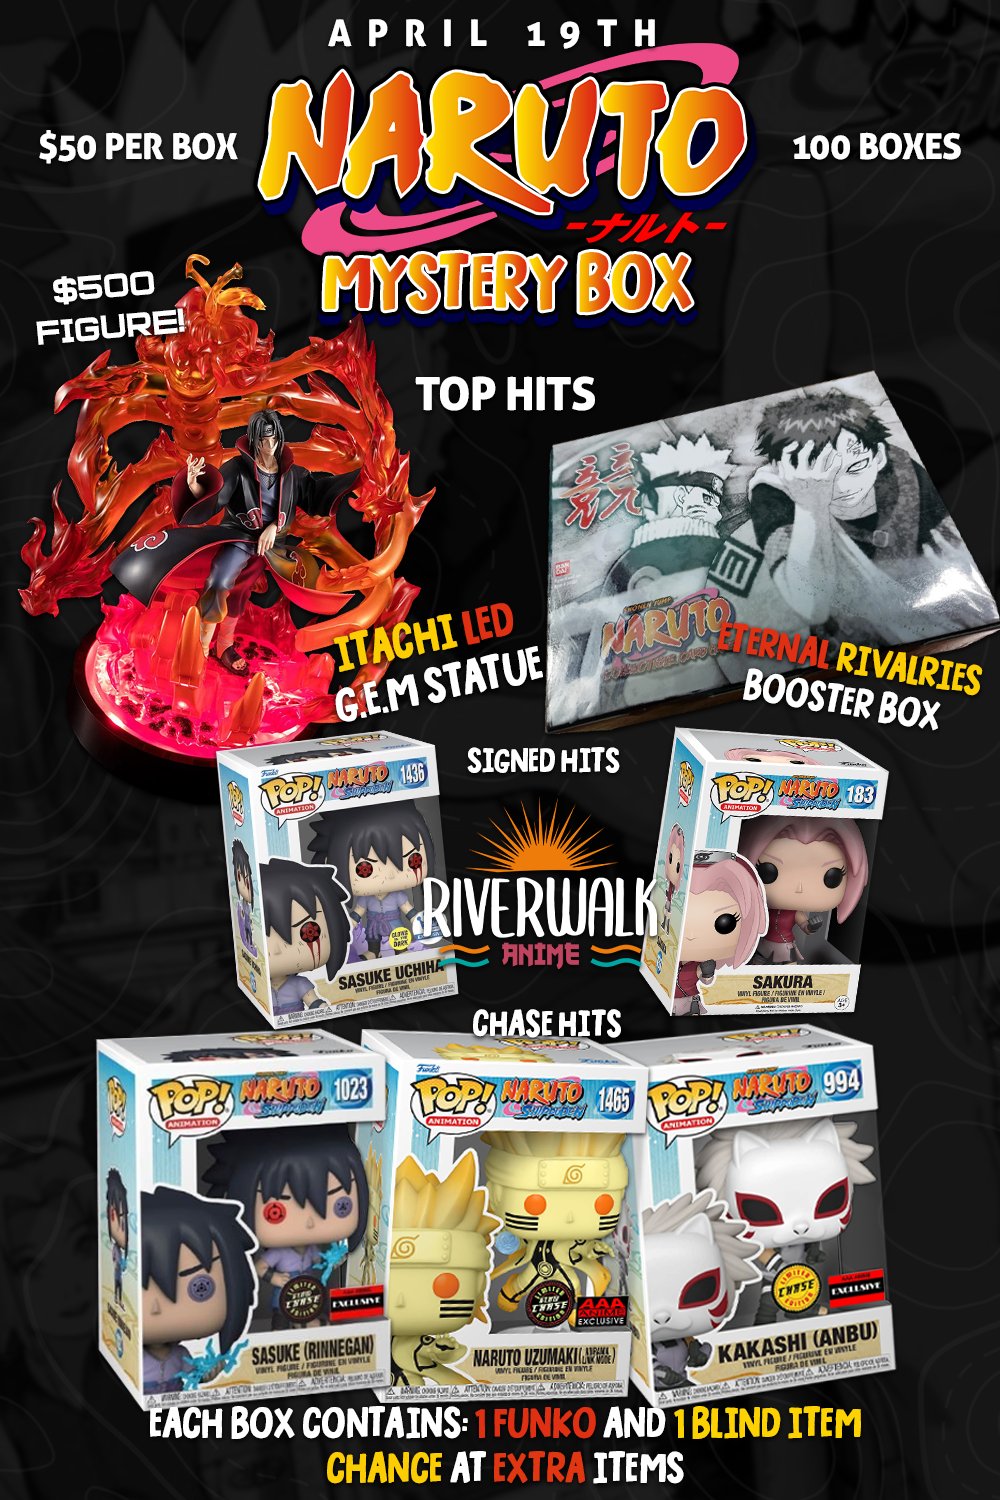 TCGDISTRICT: Naruto FUNKO x Blind box mystery box